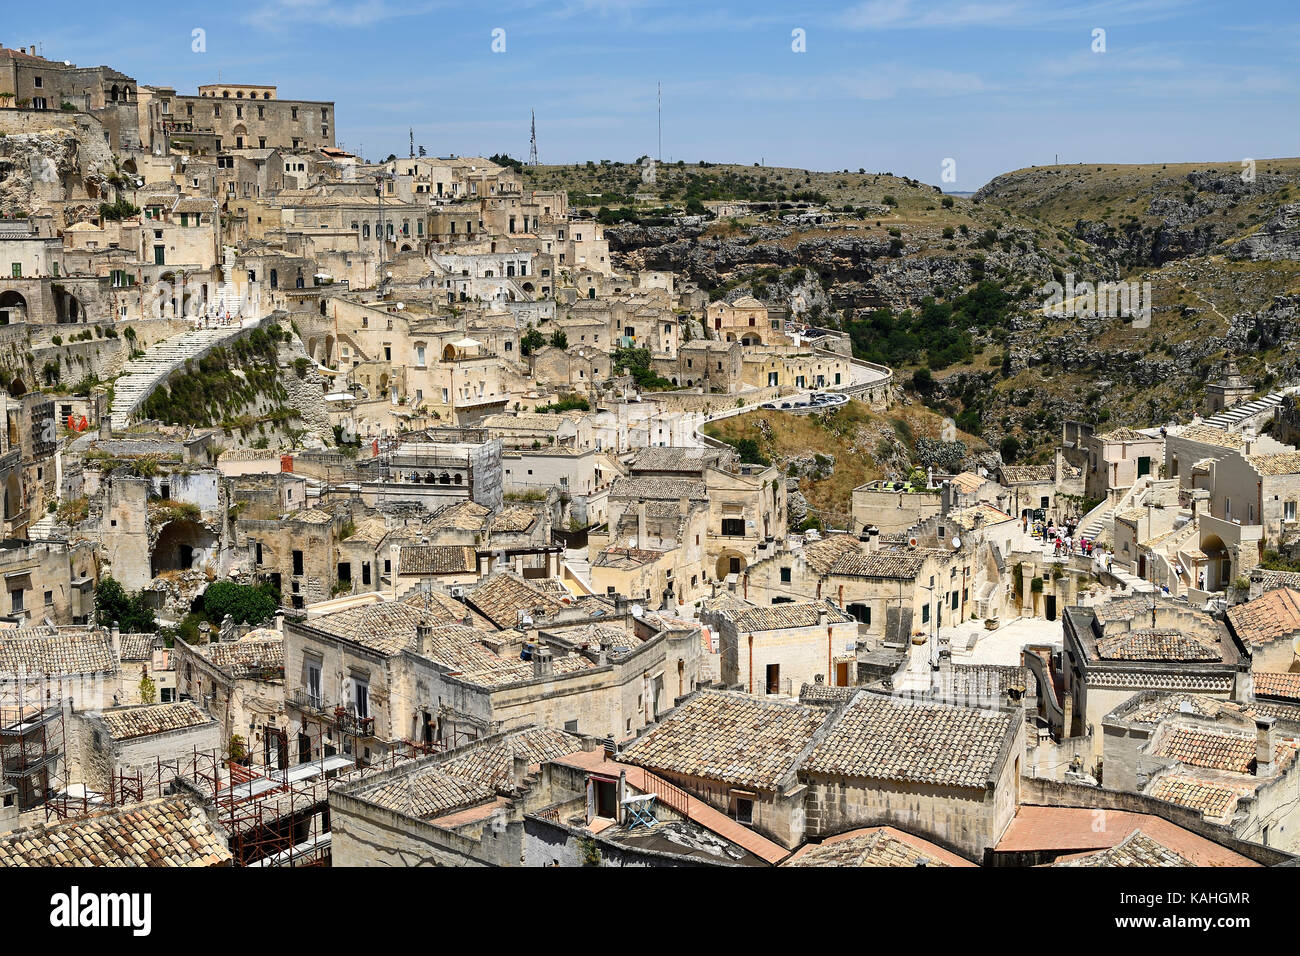 Medieval old town, Sassi di Matera, Capital of Culture 2019, Matera, province of Basilicata, Italy Stock Photo